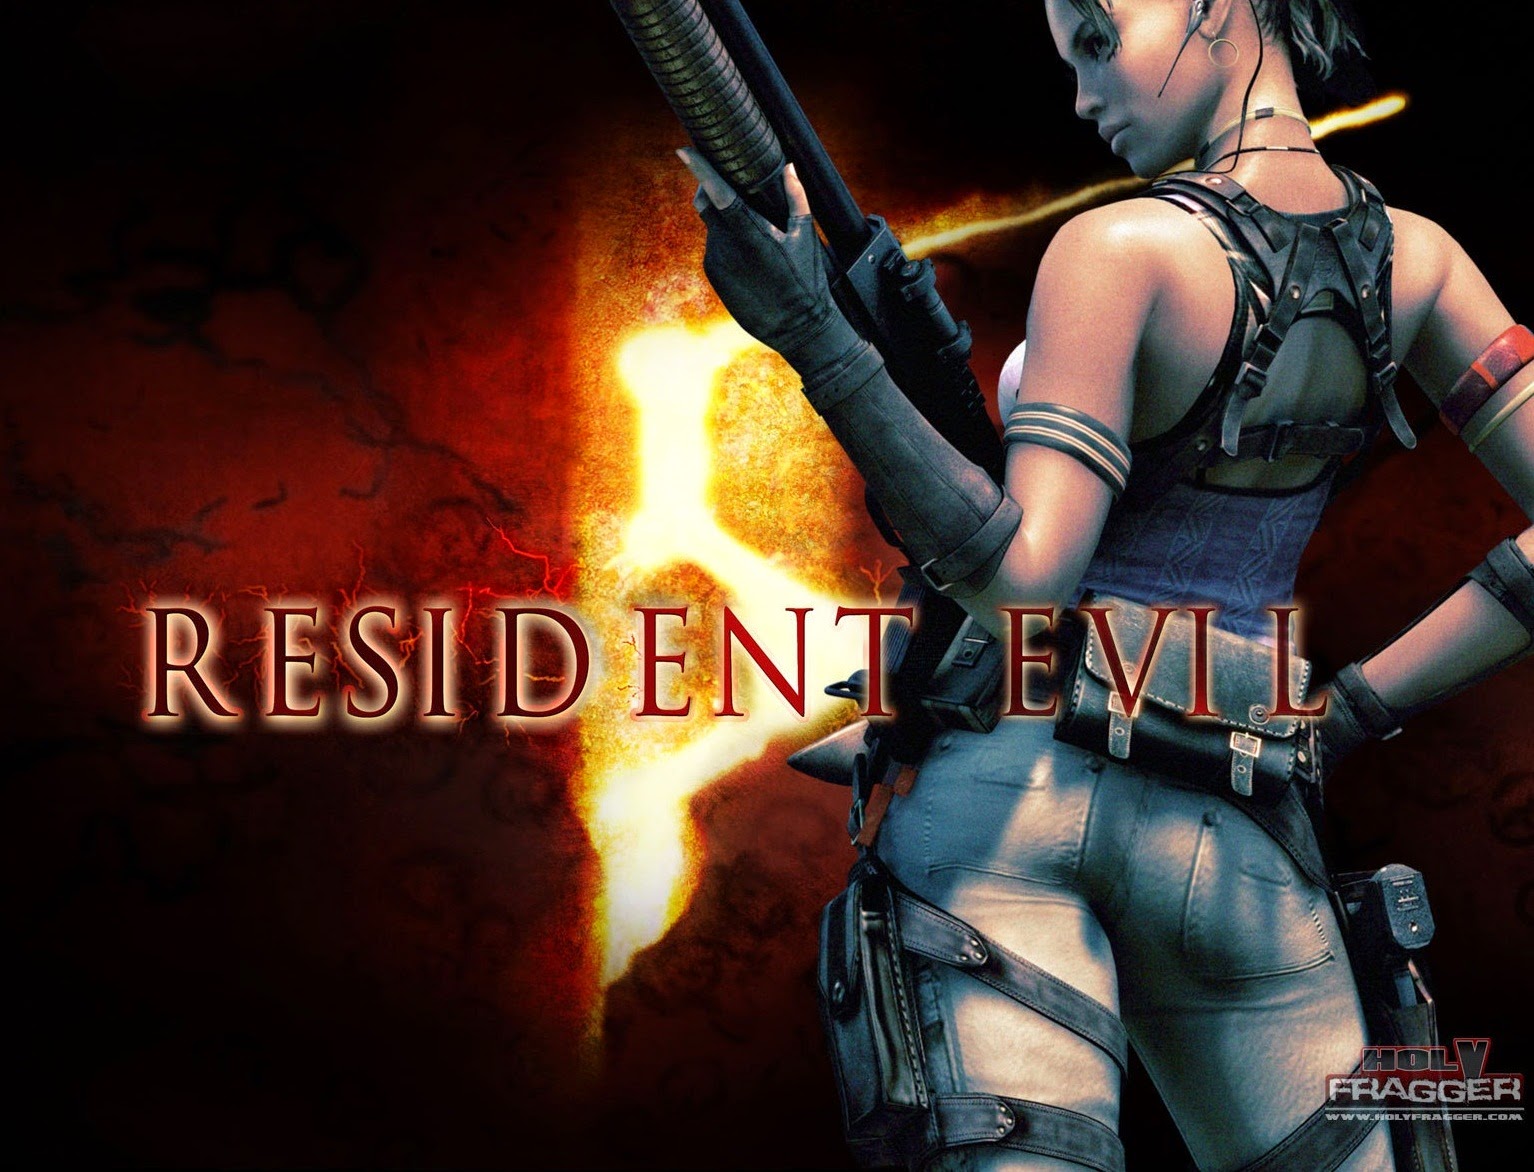 Resident evil 7 full movie download in hindi